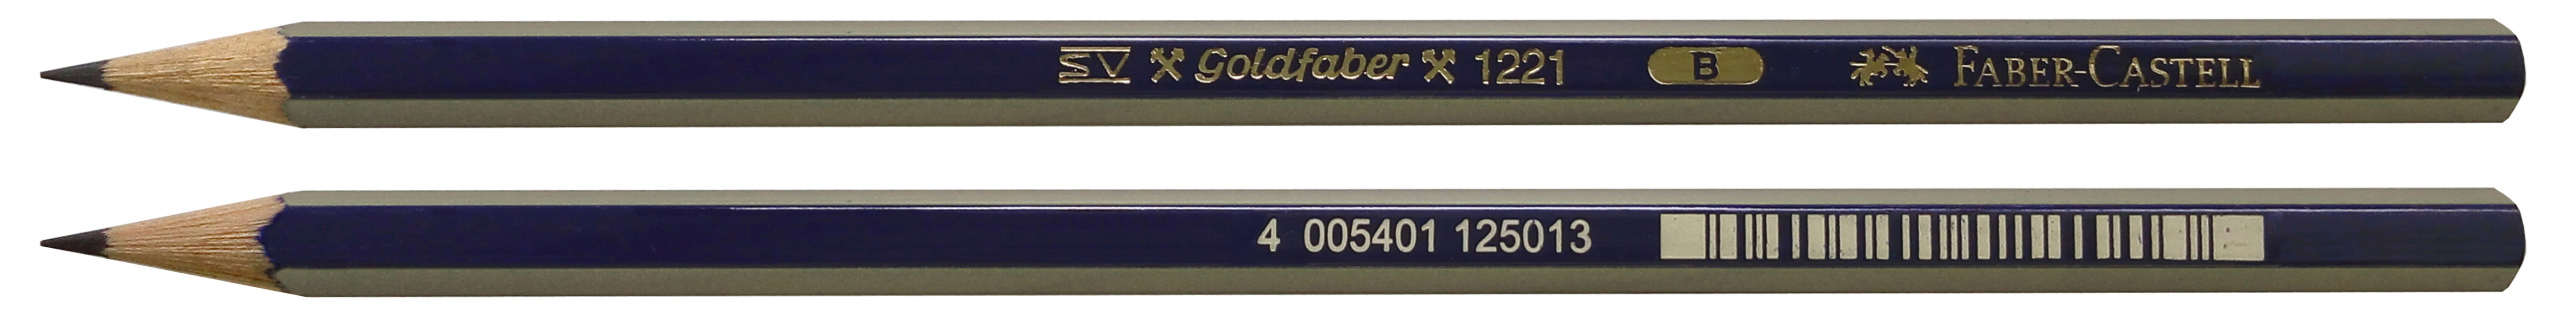 FABER-CASTELL Crayon B 112501 Goldfaber